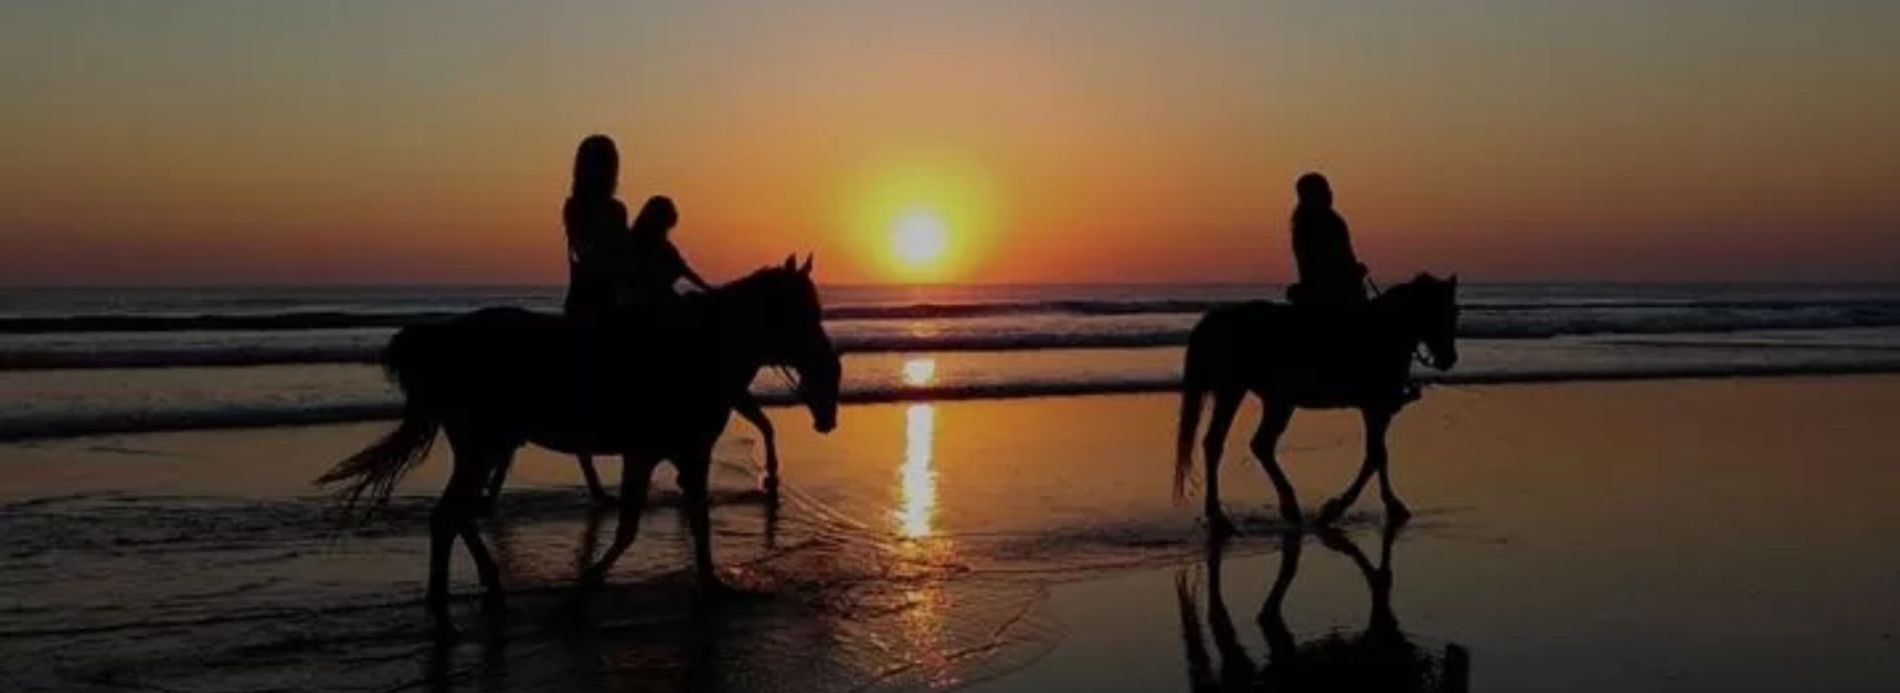 horseback riding on beach at sunset